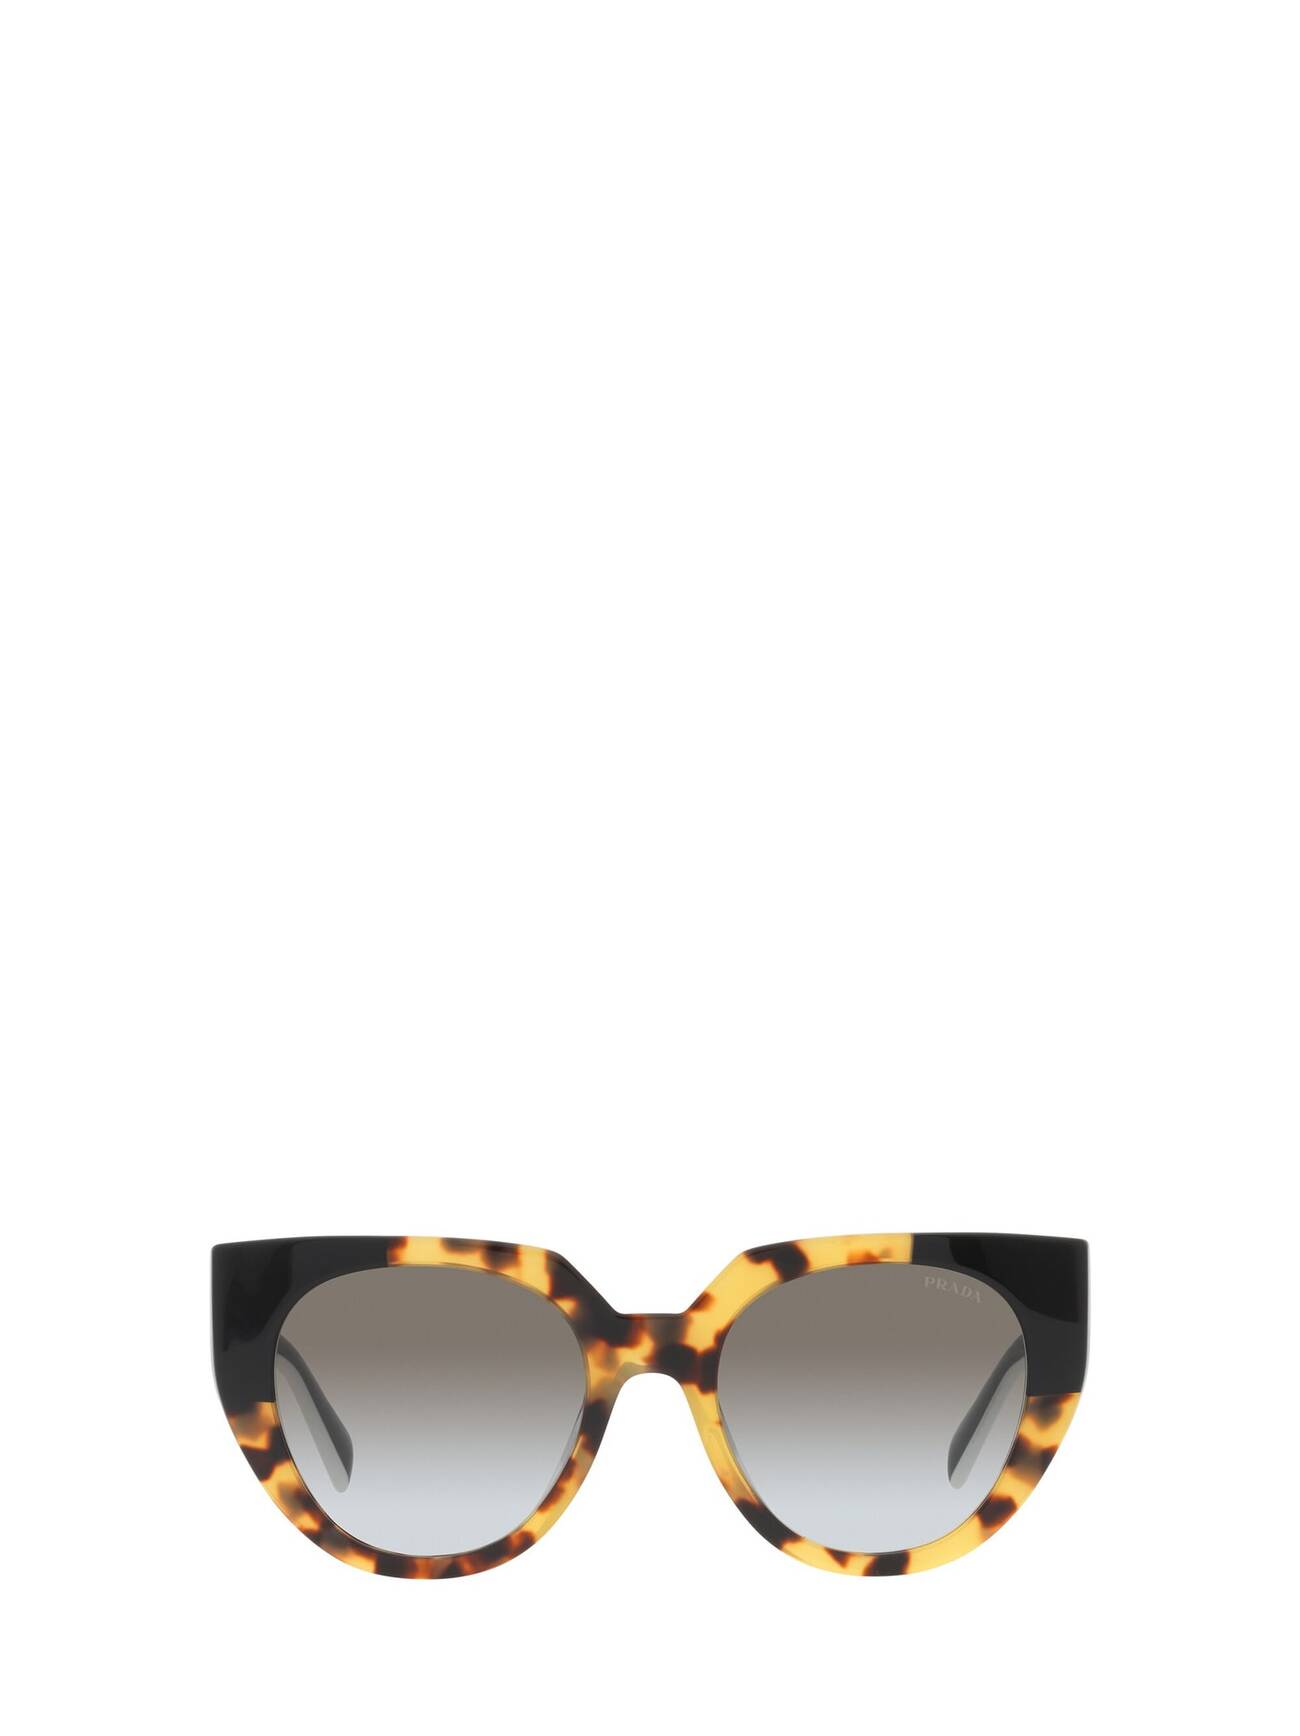 Prada Eyewear Pr 14ws Medium Tortoise / Black Sunglasses